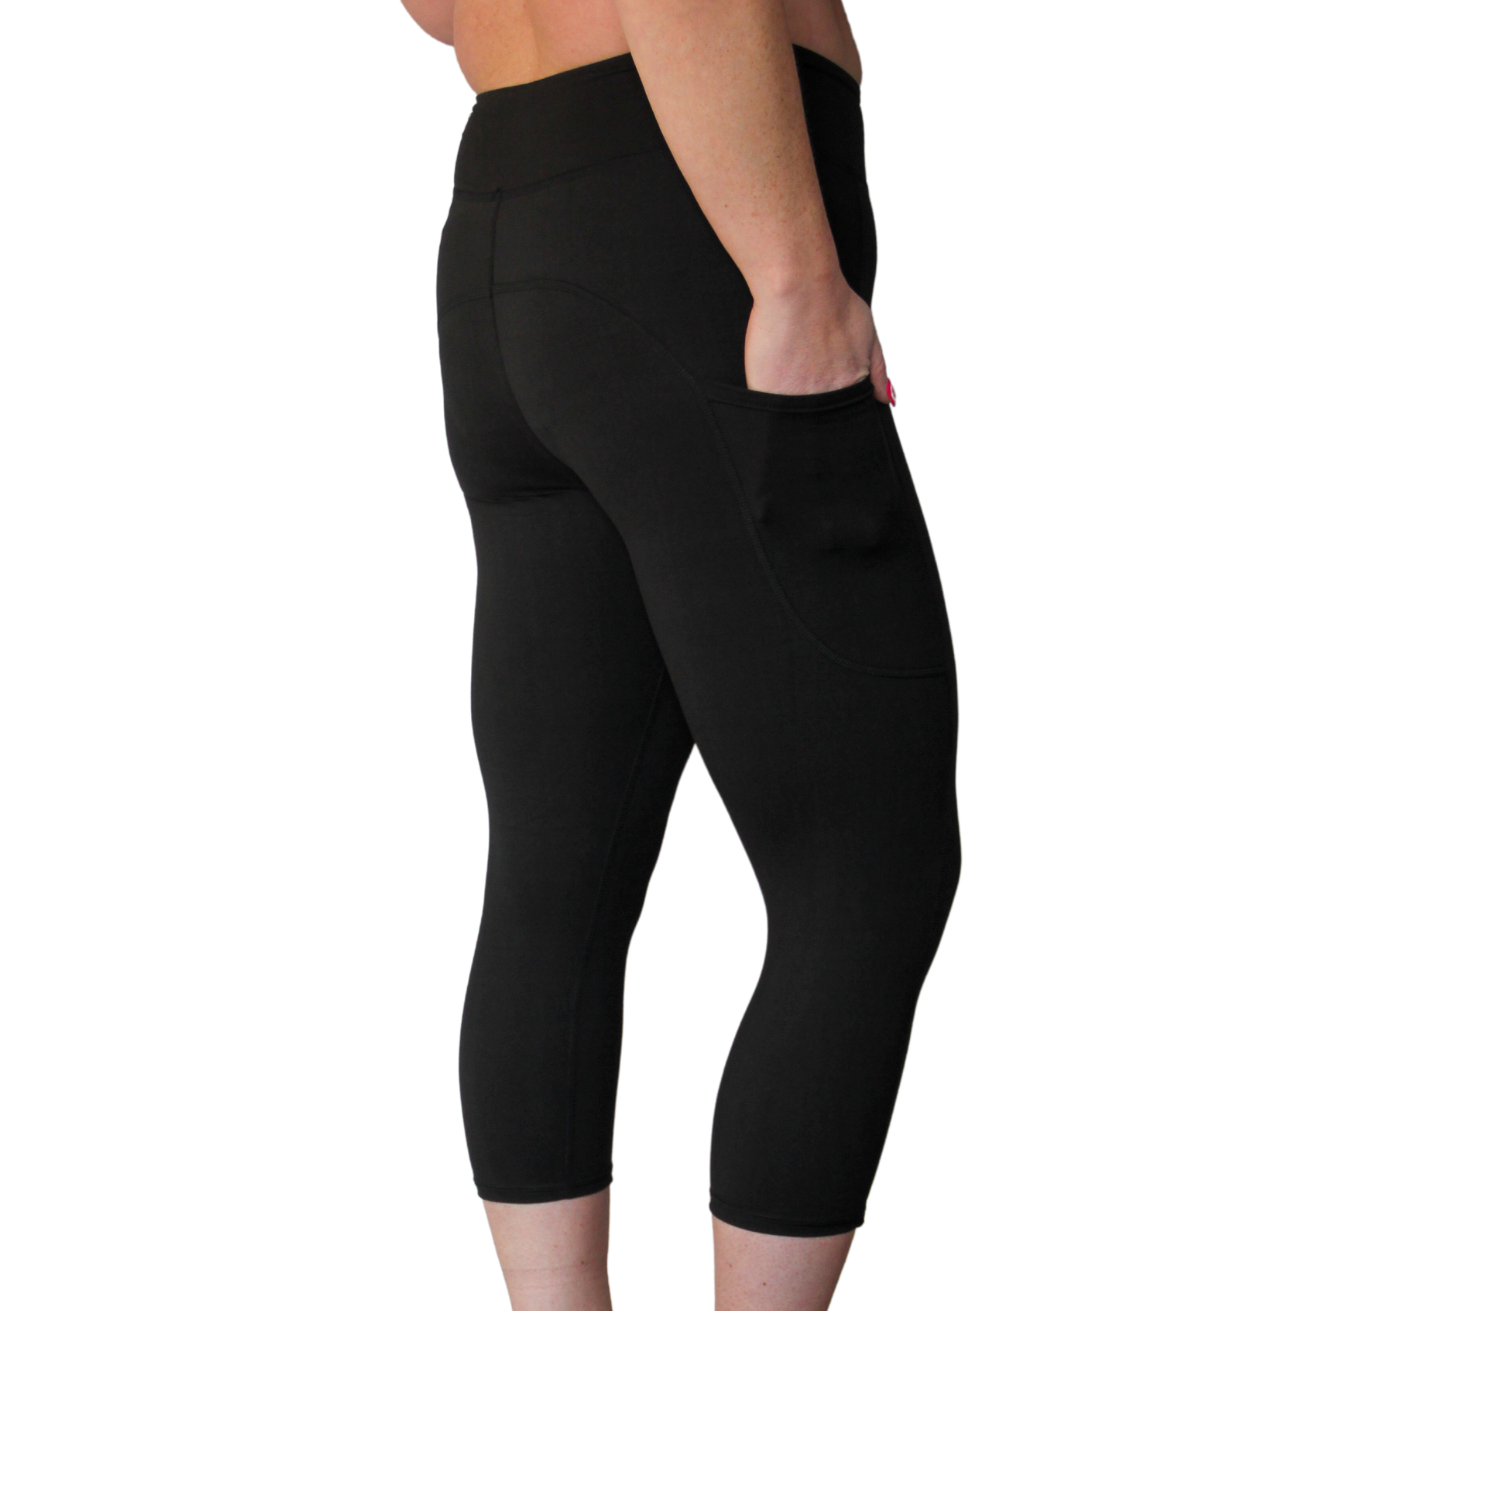 Buy Womens Plus Size Capri Yoga Pants Black 2X Online at